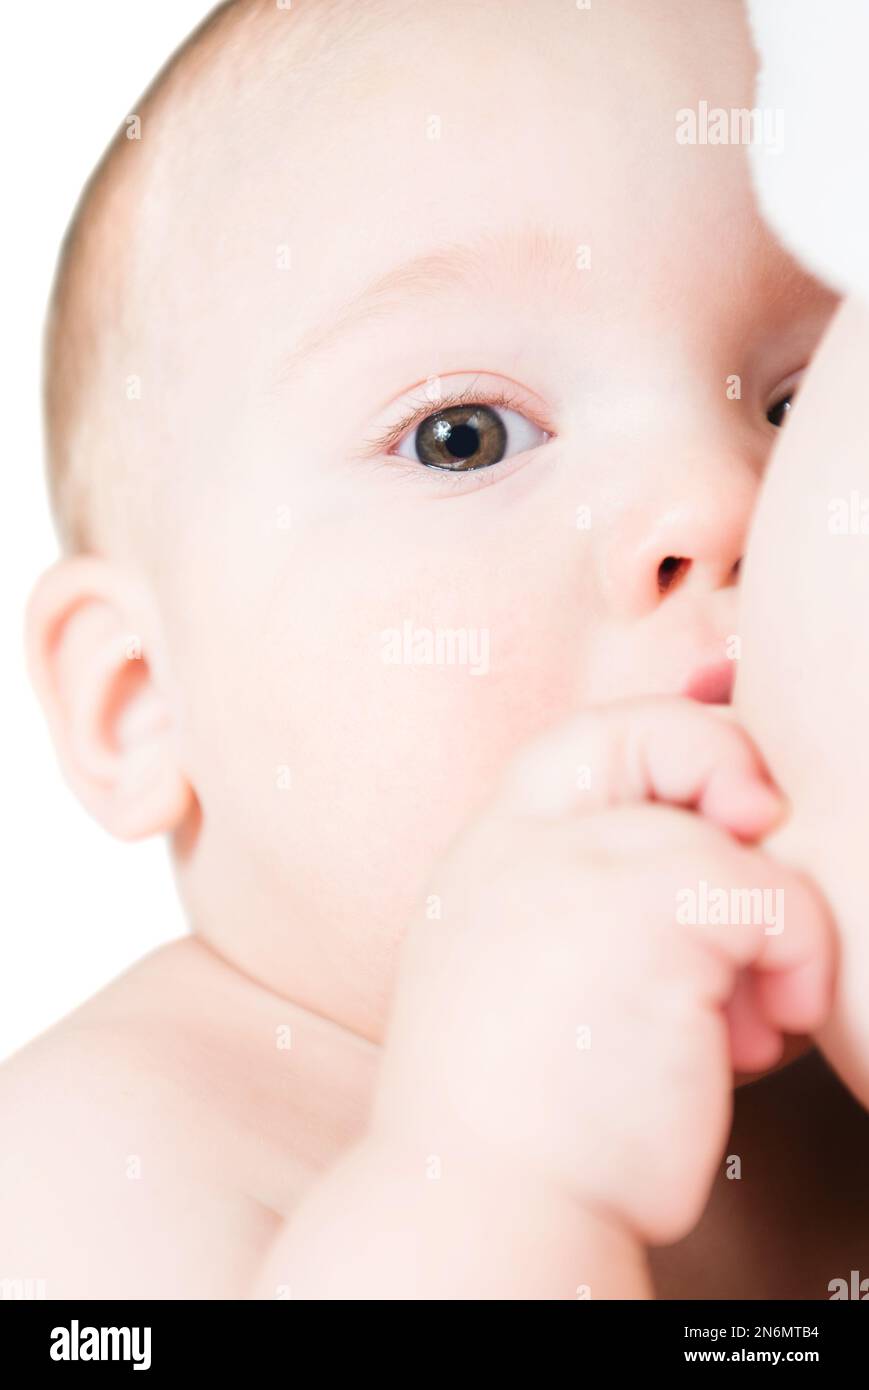 Little baby boy breast feeding, isolated on white background Stock Photo